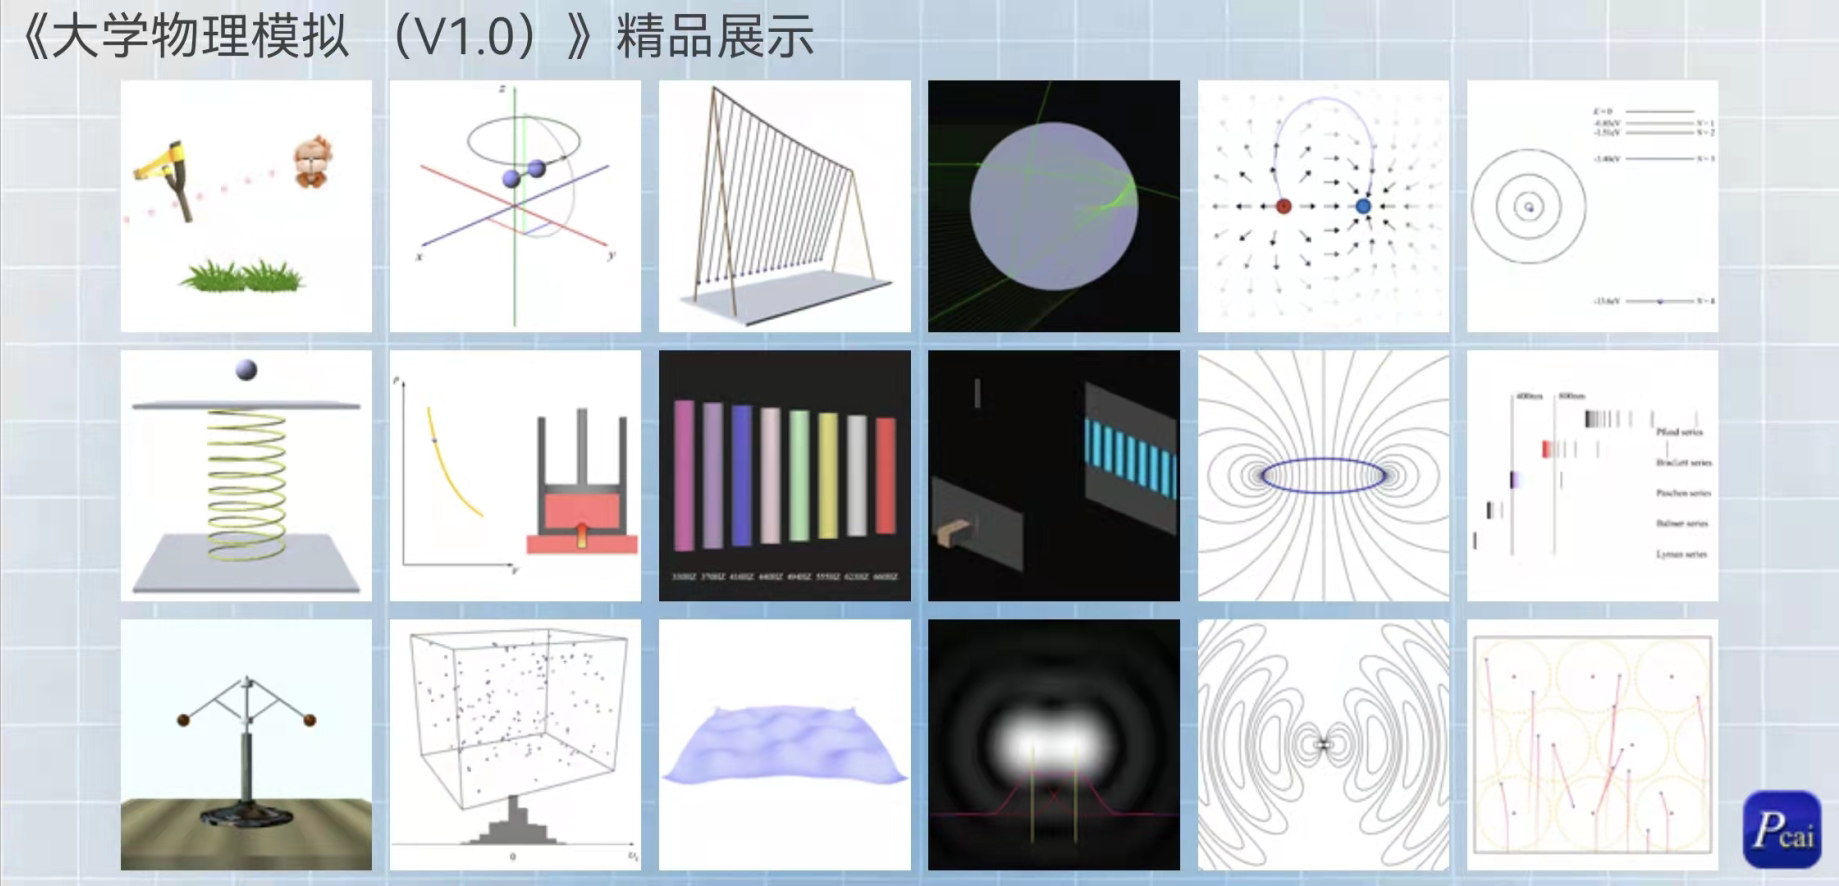 《大学物理模拟（V1.0）》（精品展示）Android 版本发布